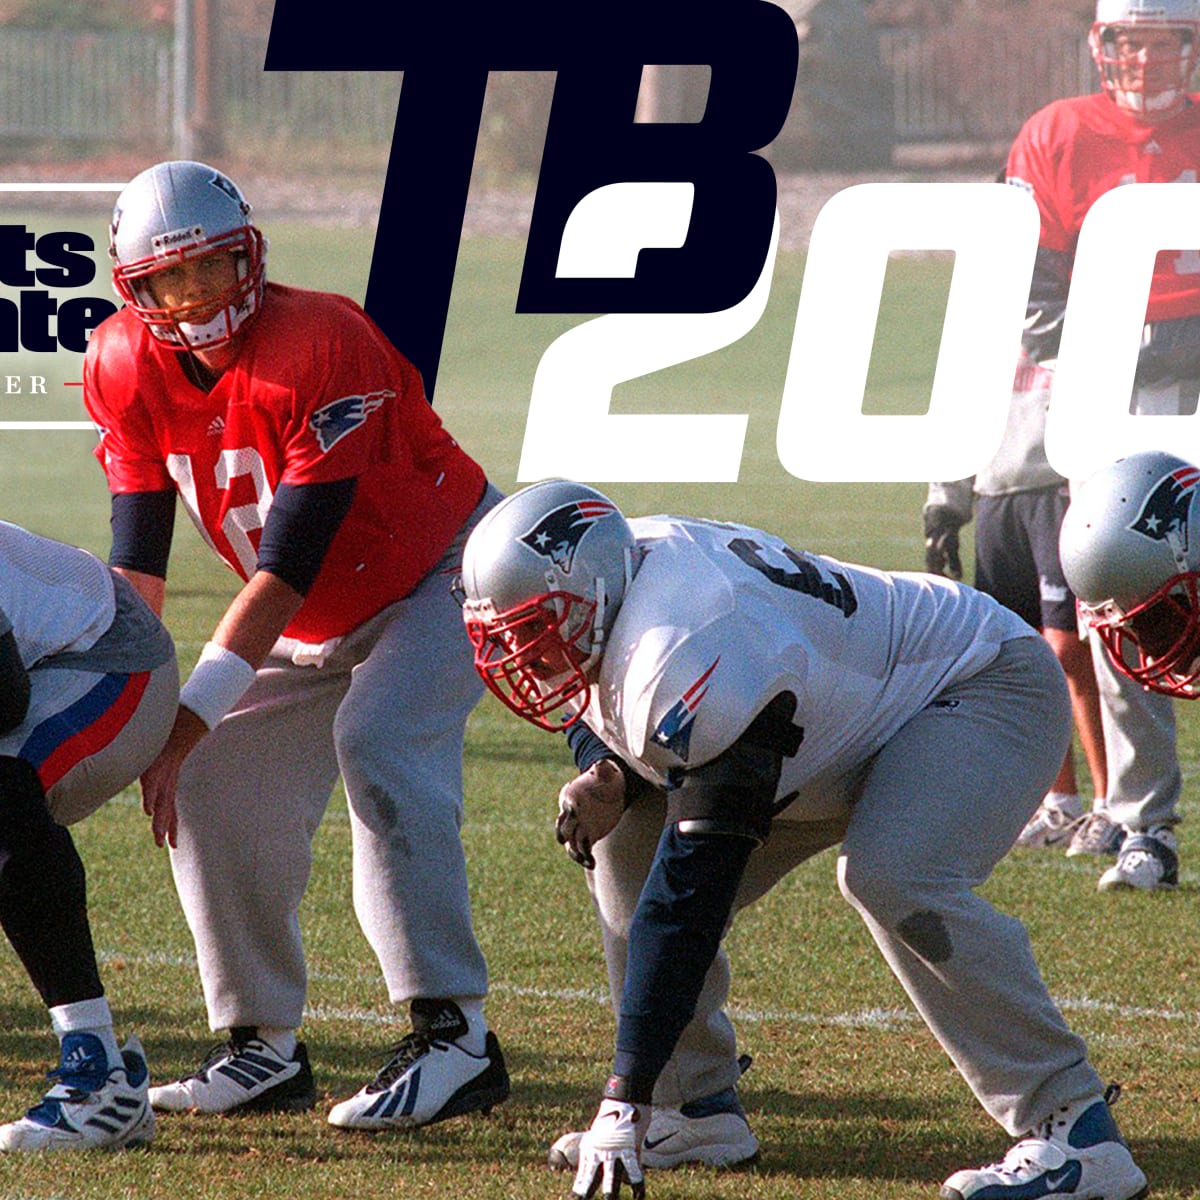 Tom Brady: Inside his forgotten rookie season of 2000 - Sports Illustrated